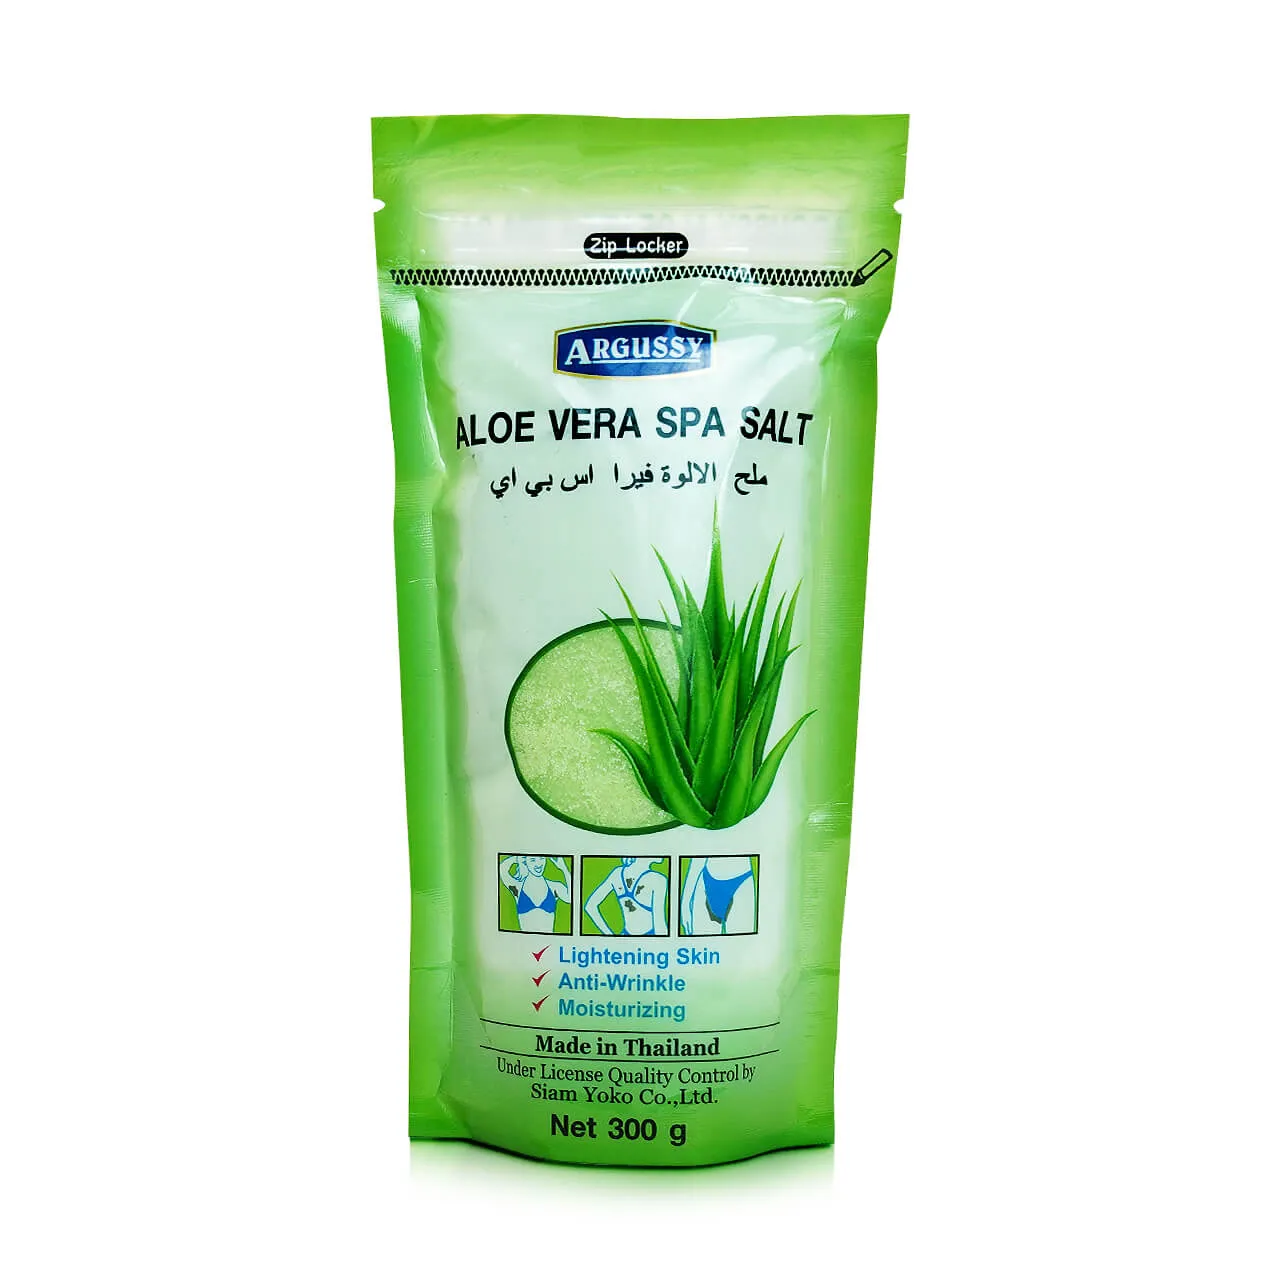 Argussy Aloe Vera Spa Salt 300g